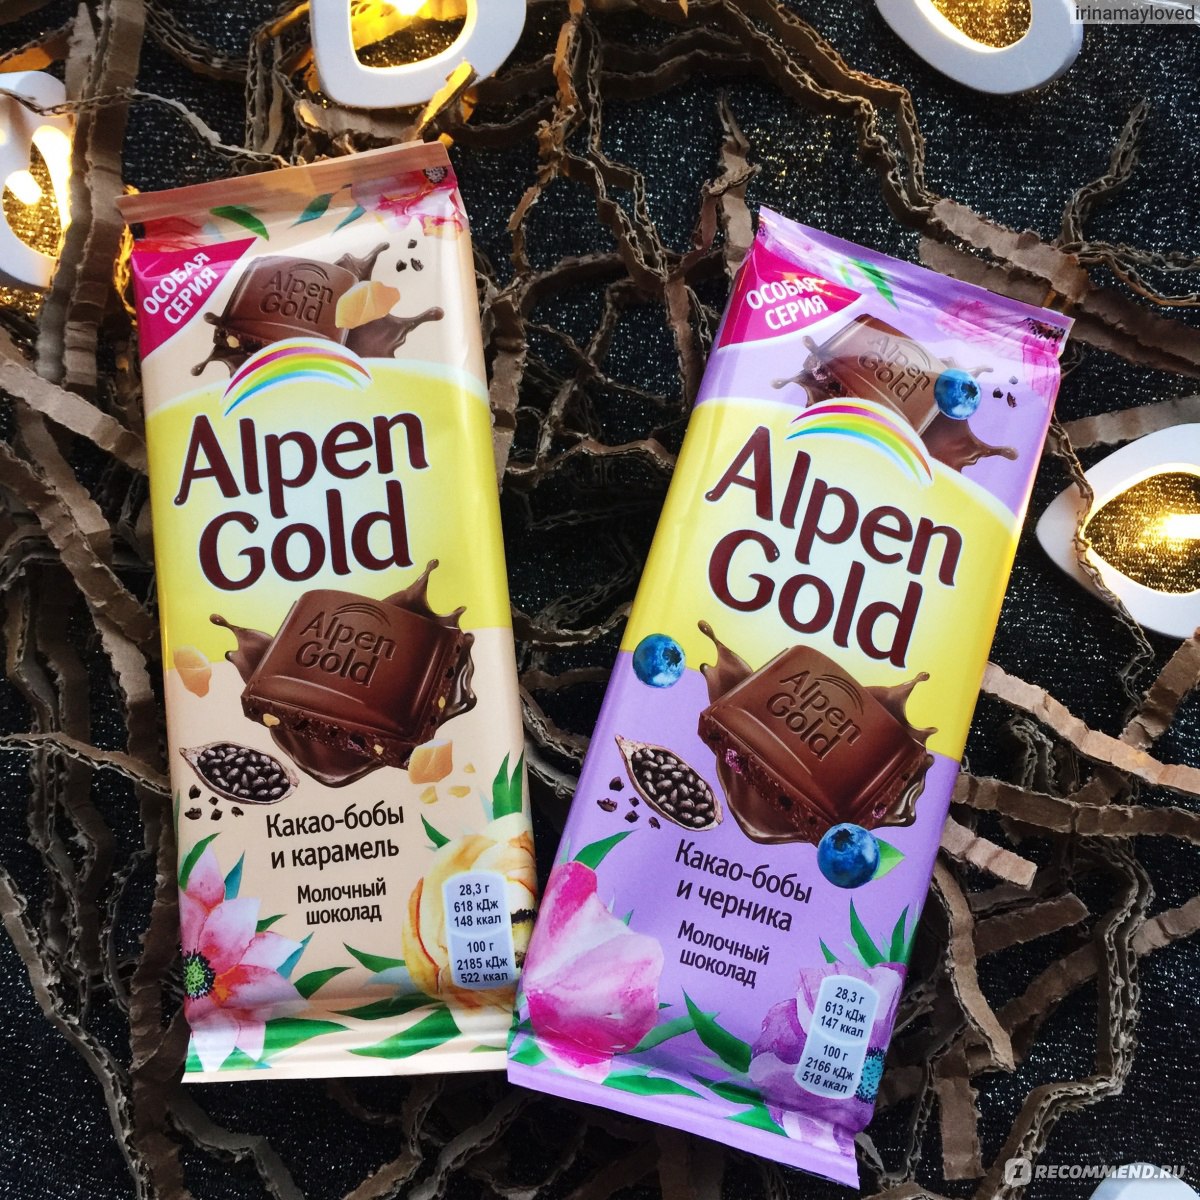 Анпенгольд шоколад. Шоколад Альпен Гольд. Вкусы шоколада Альпен Гольд. Alpen Gold шоколад вкусы. Шоколадки Альпен Гольд вкусы.